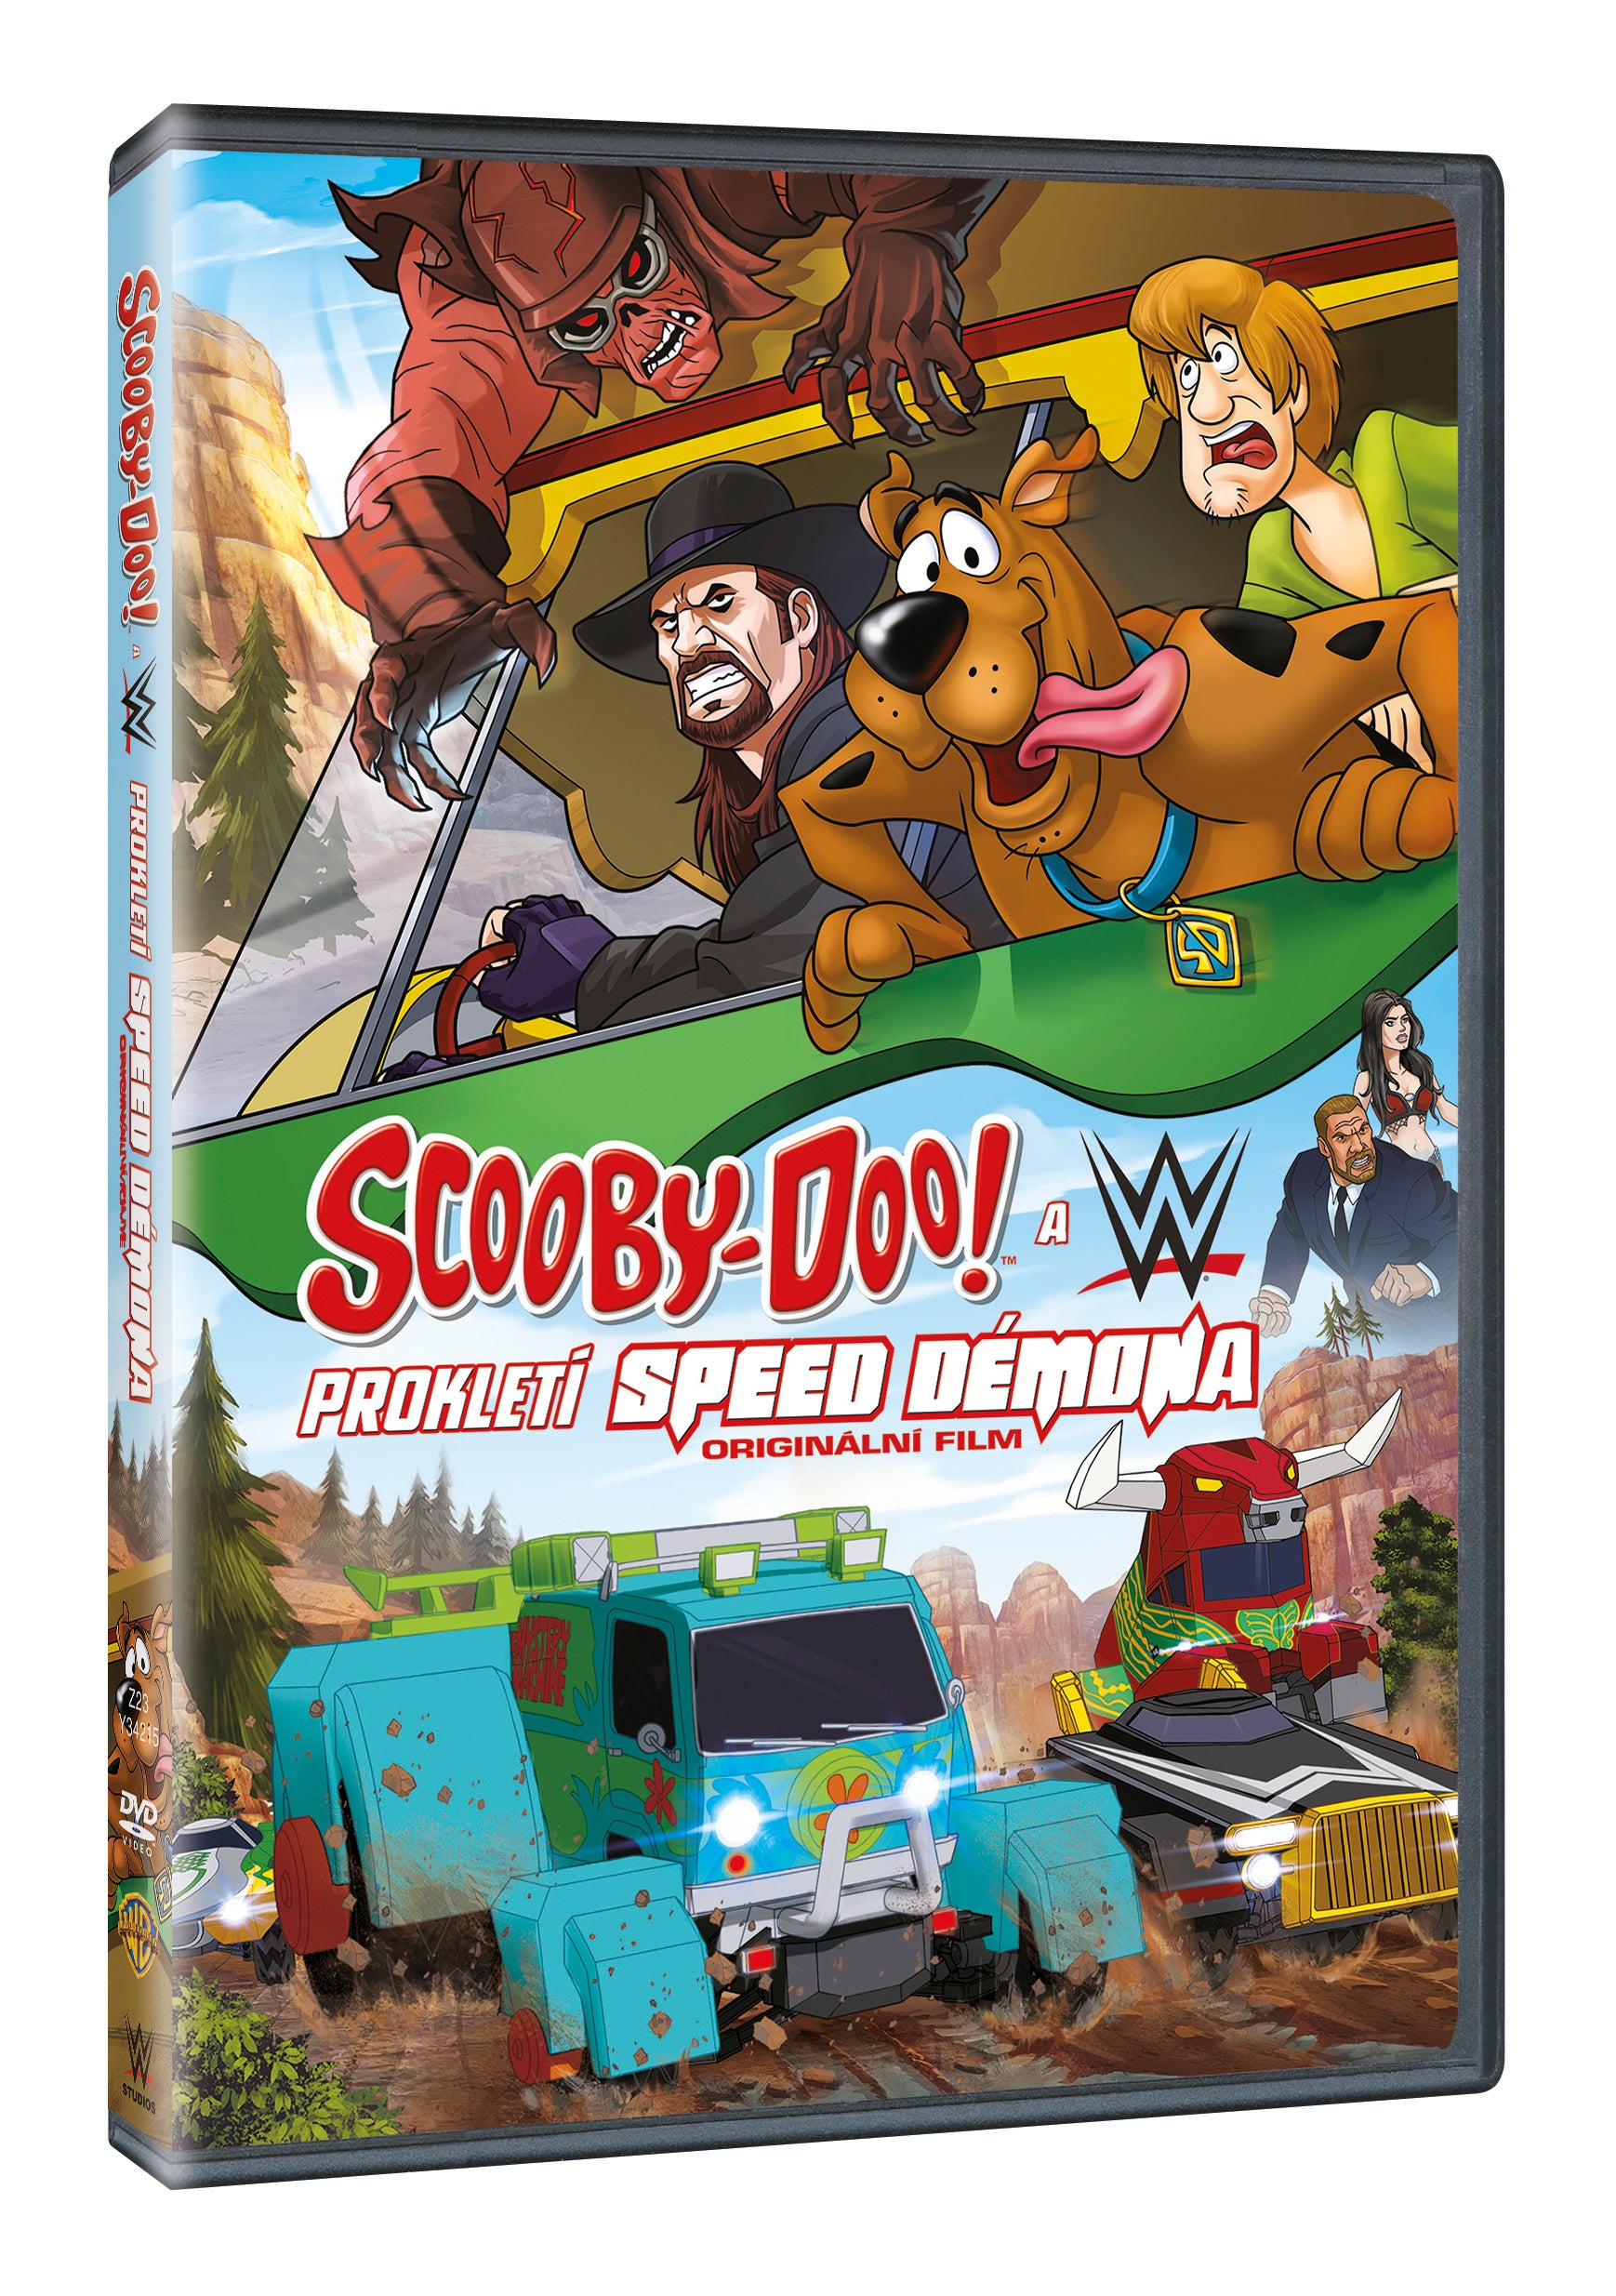 Scooby-Doo & WWE:Prokleti Speed Demona DVD / Scooby-Doo & WWE:Curse of the Speed Demon